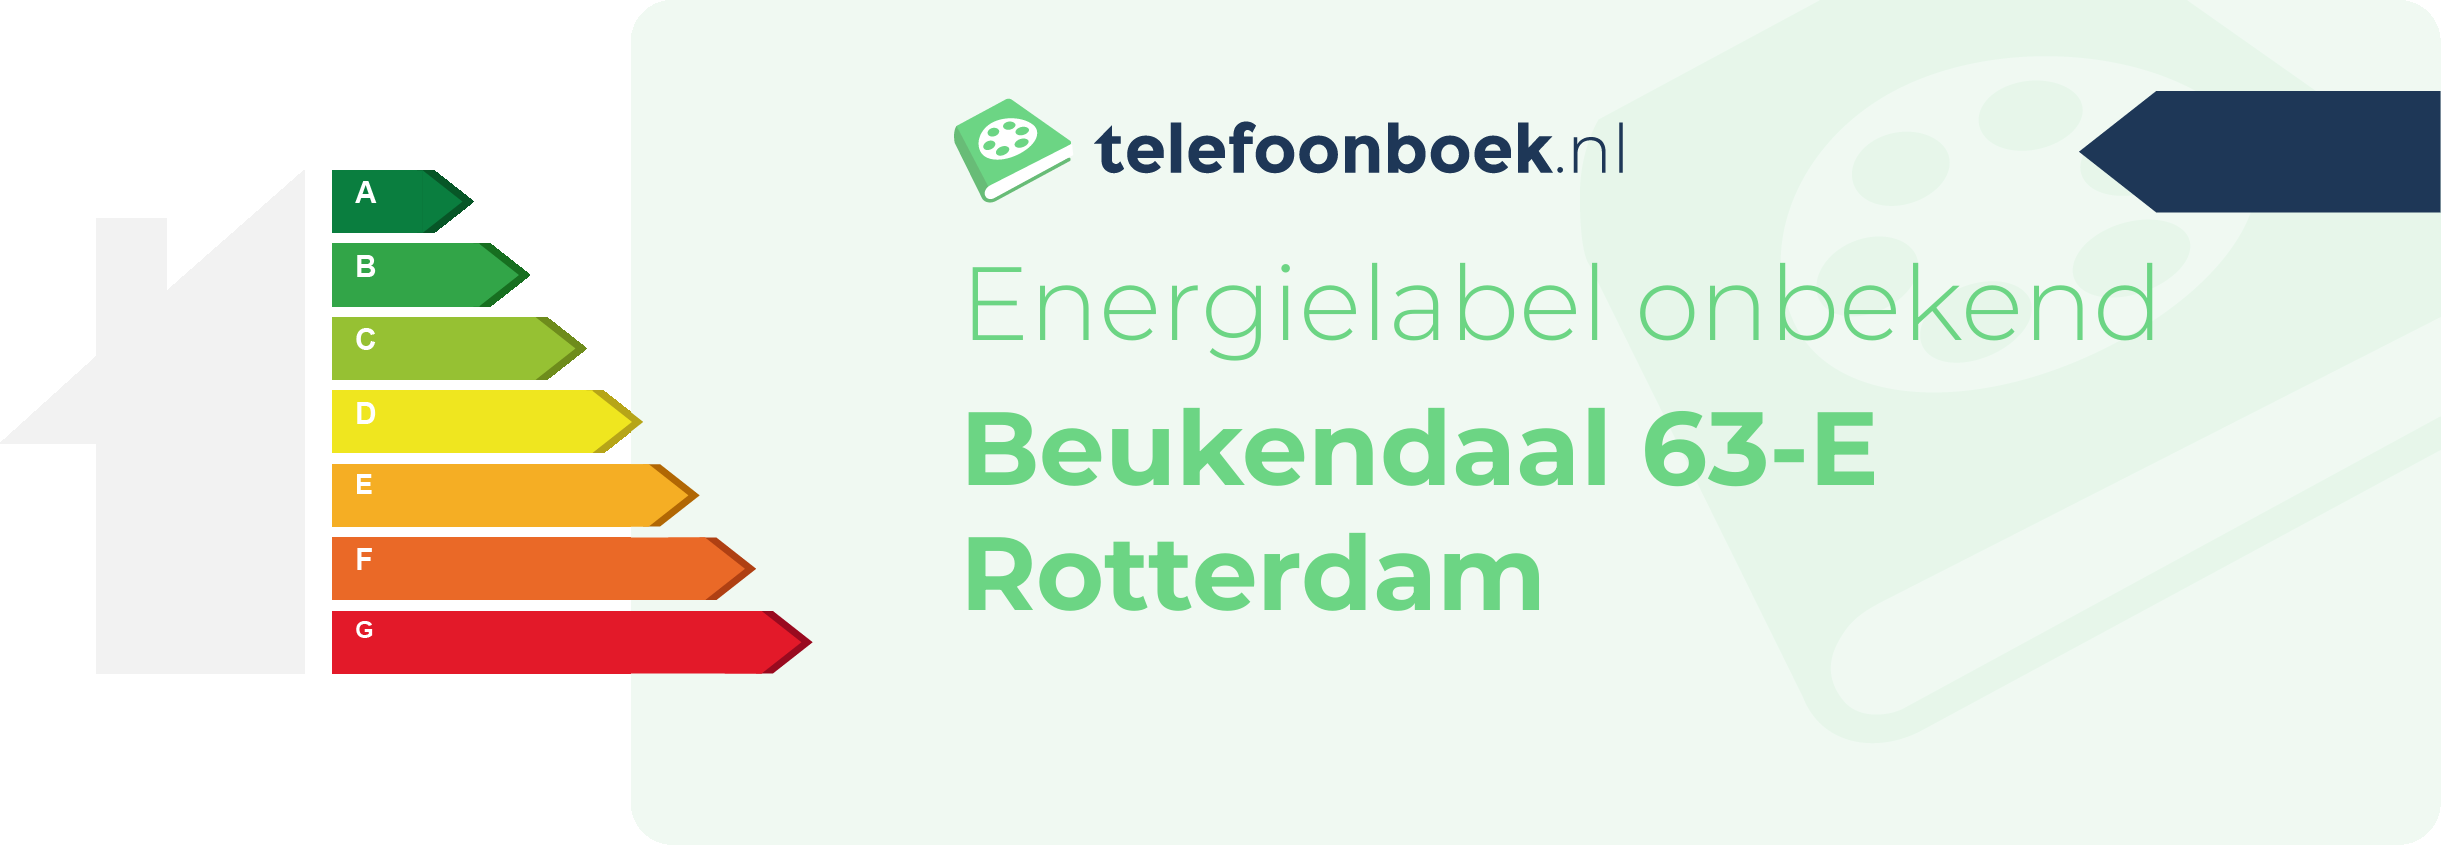 Energielabel Beukendaal 63-E Rotterdam